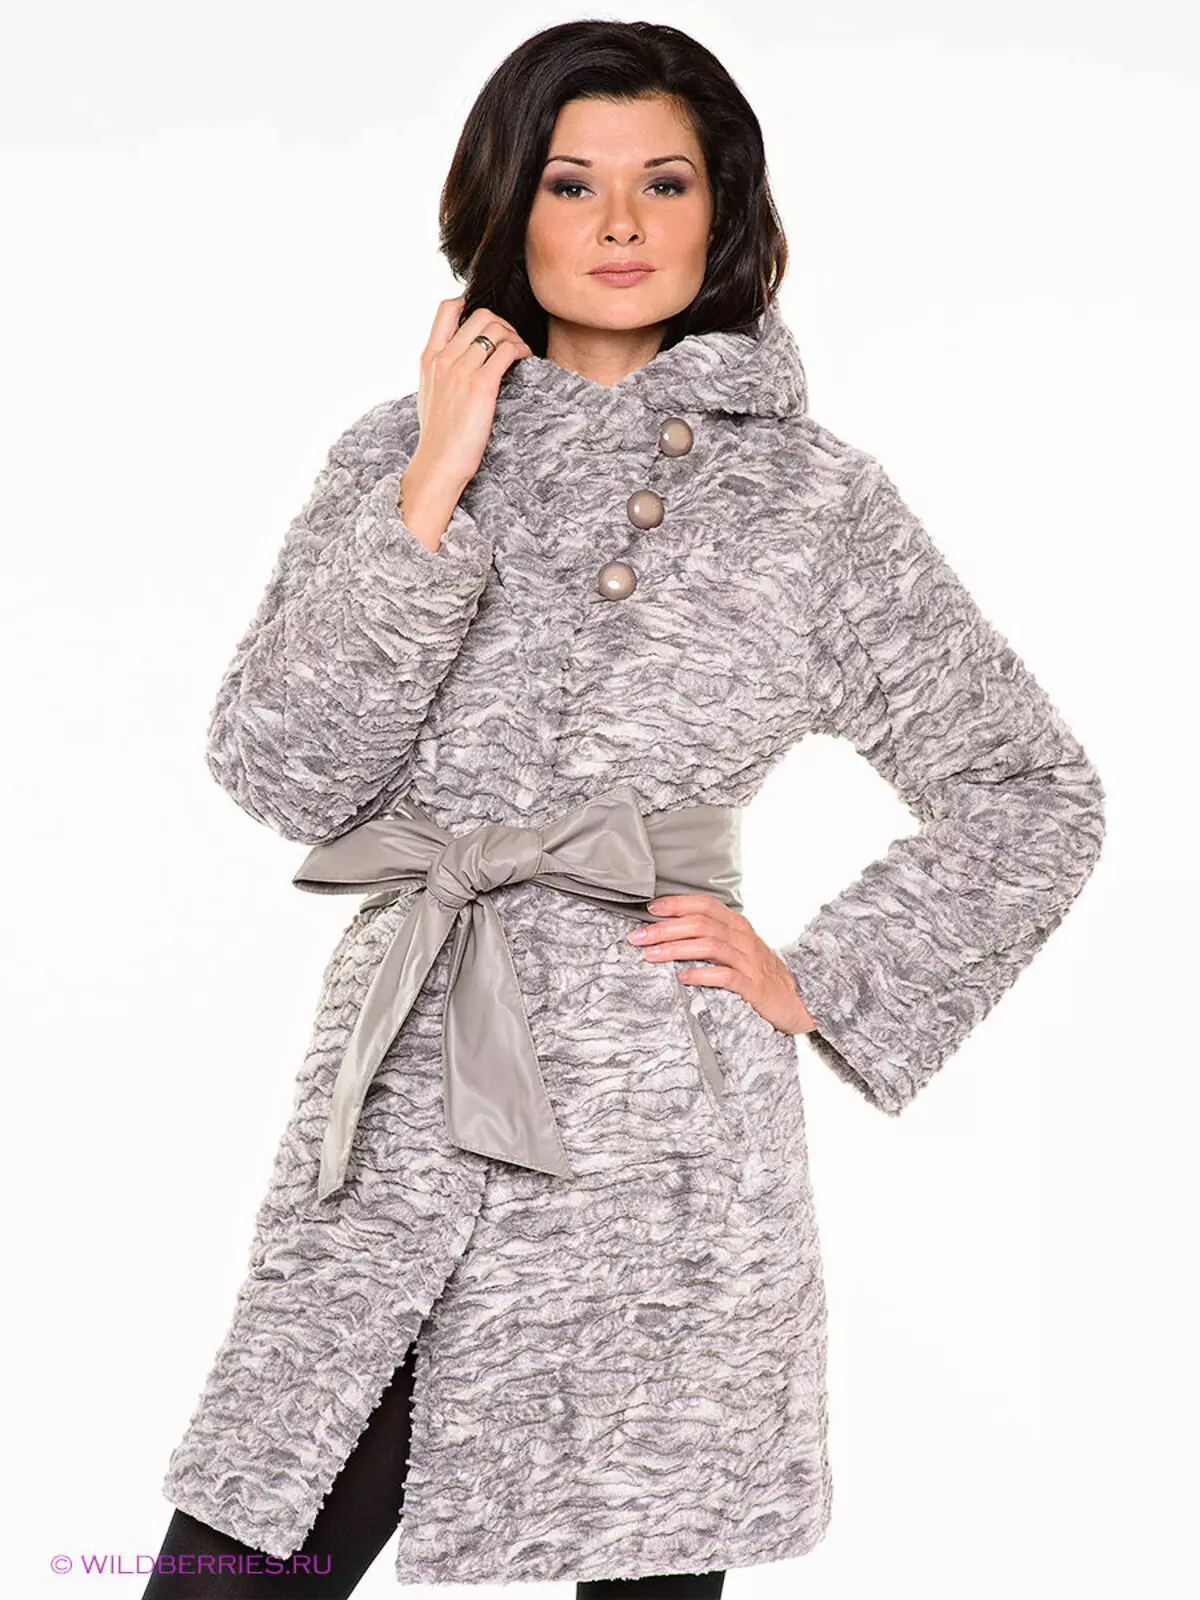 Пальто зі штучного хутра (78 фото): з каракулю, з капюшоном, плюшеве, жіночі моделі пальто 621_15